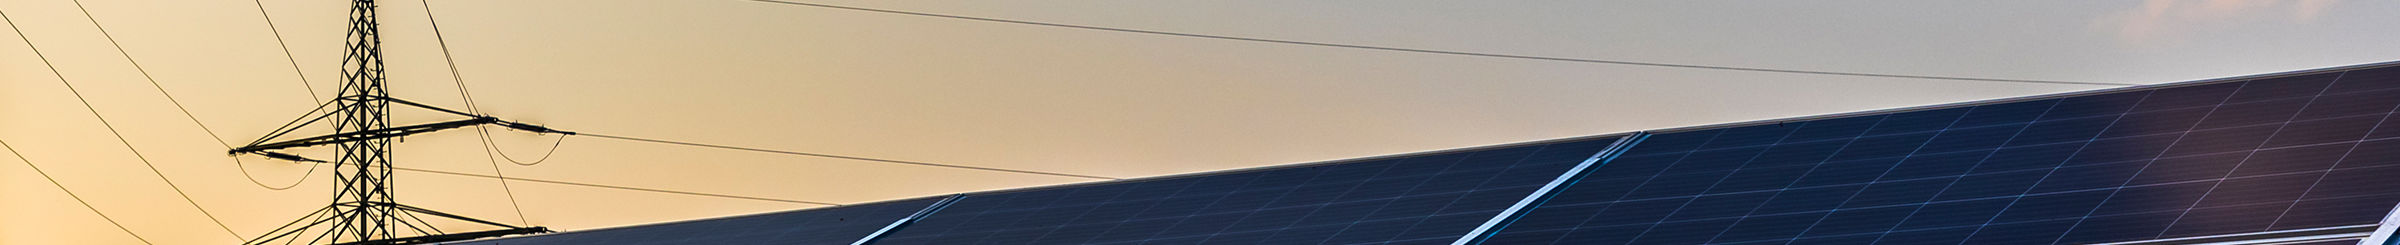 Solarpaneele im Sonnenuntergang